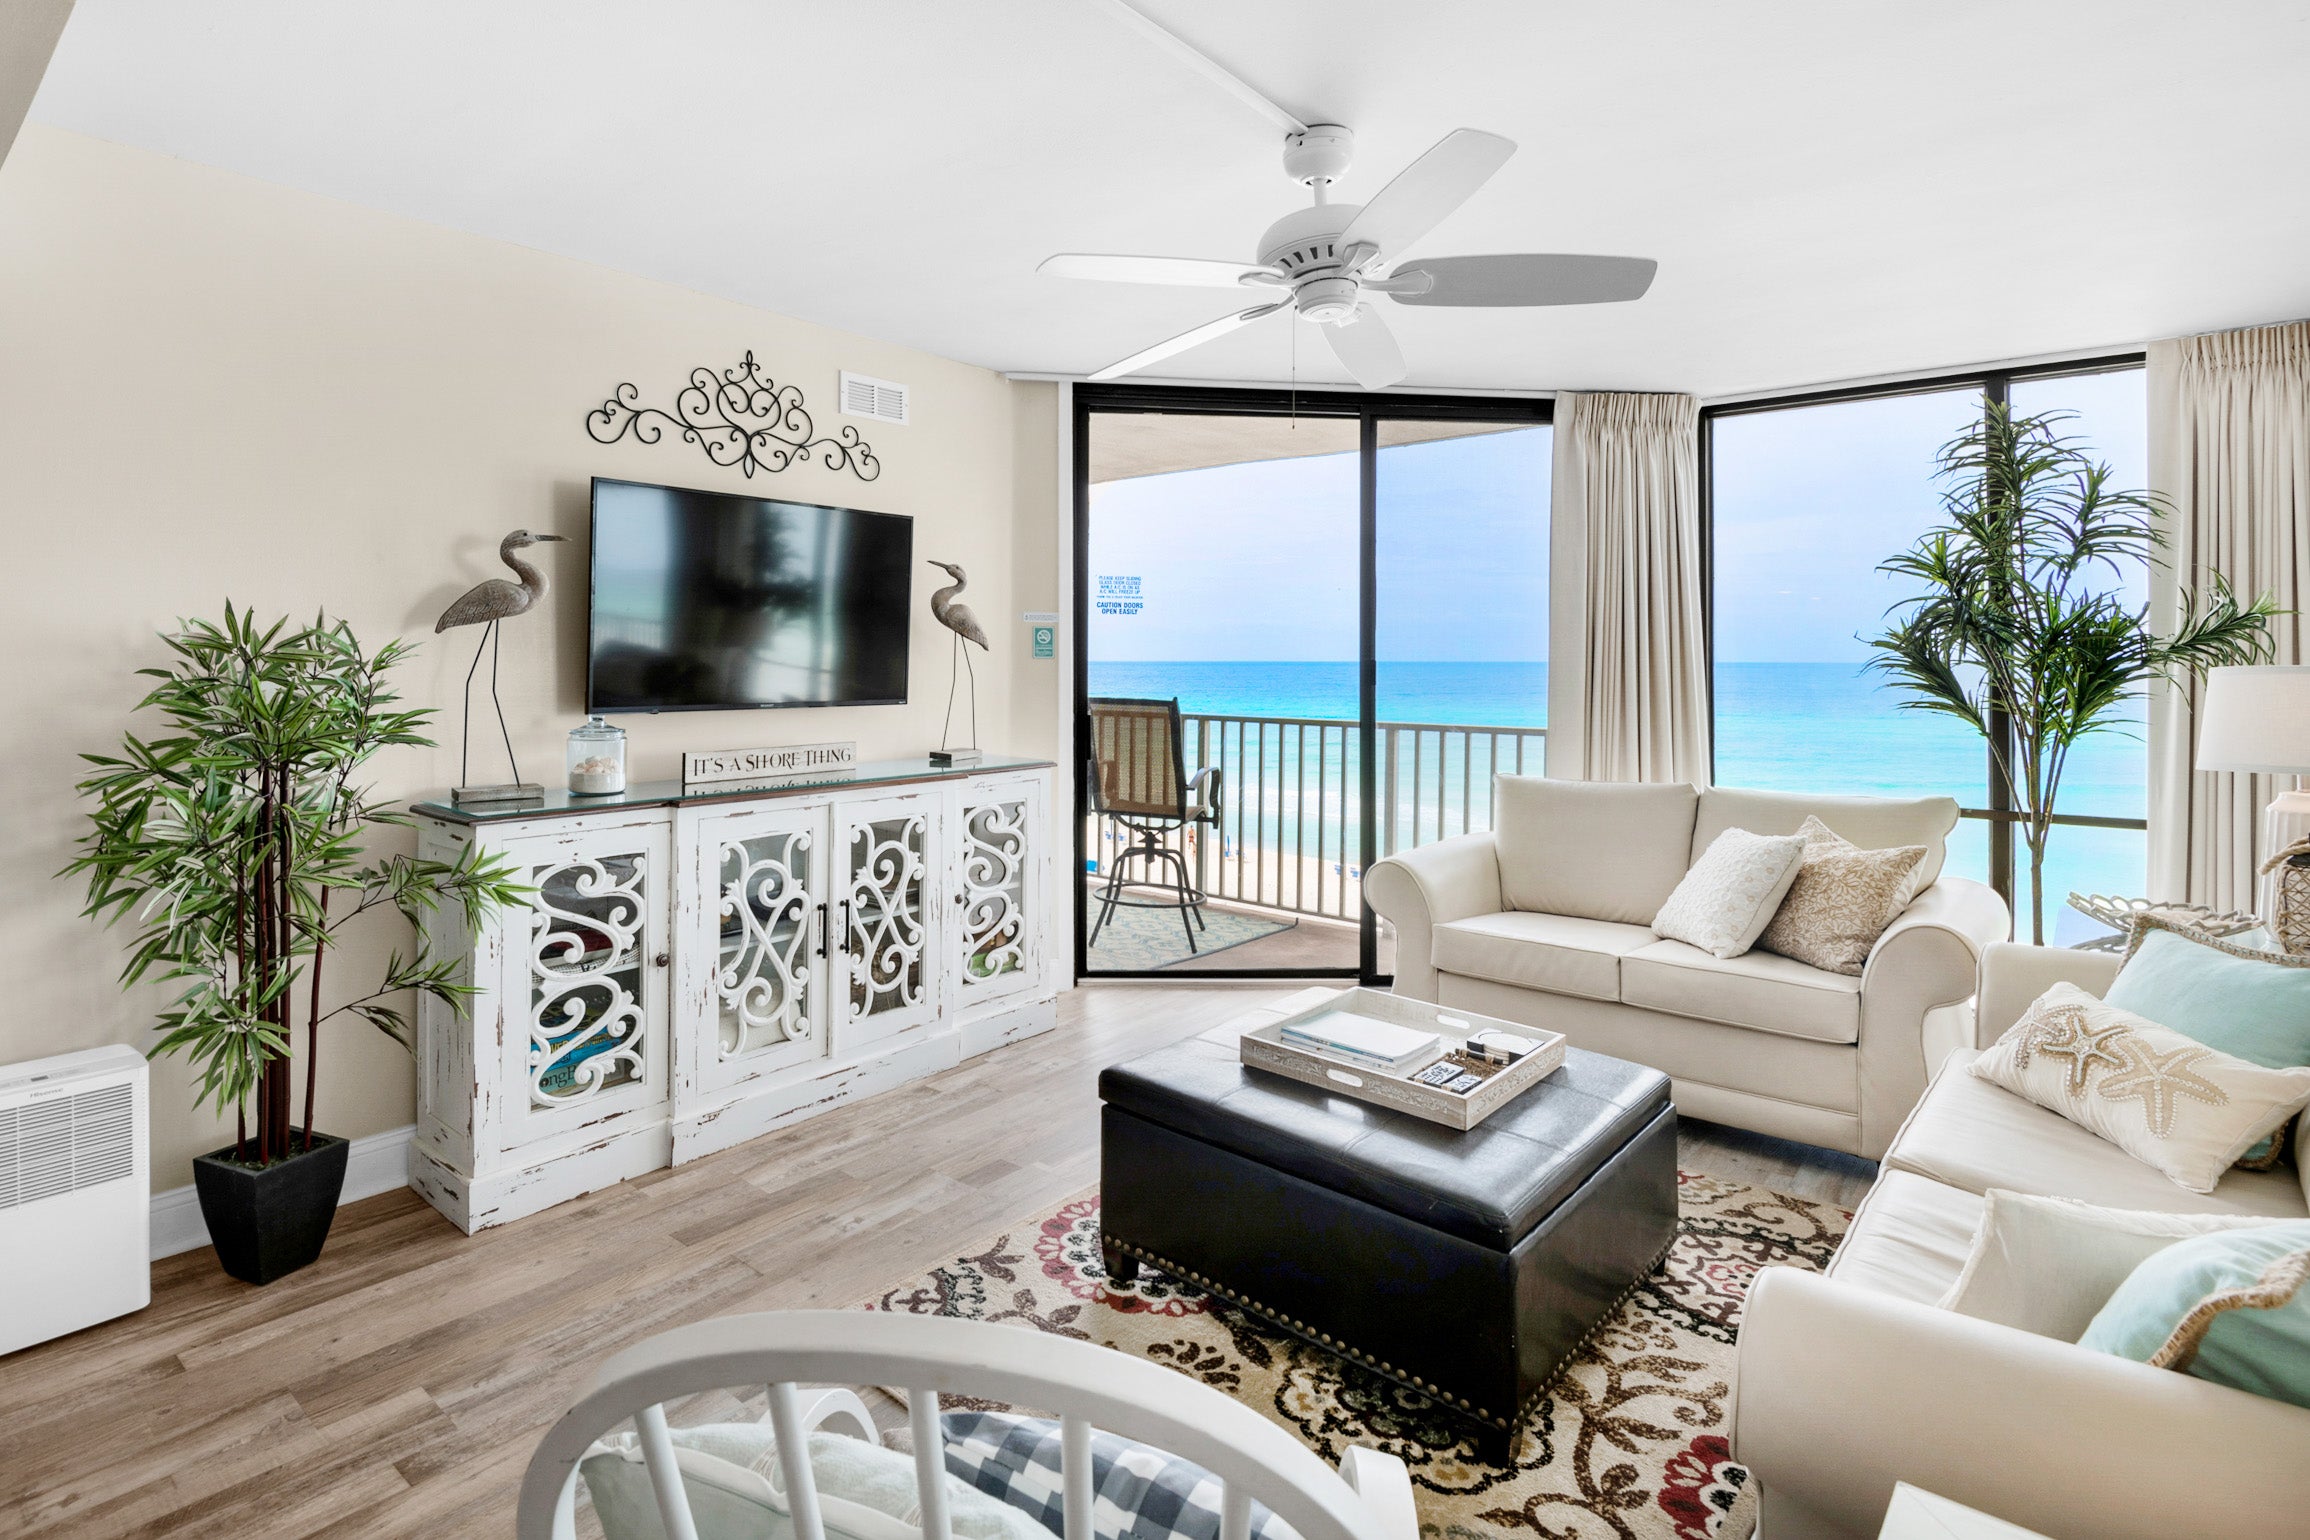 Beautiful furnishings and a flatscreen TV